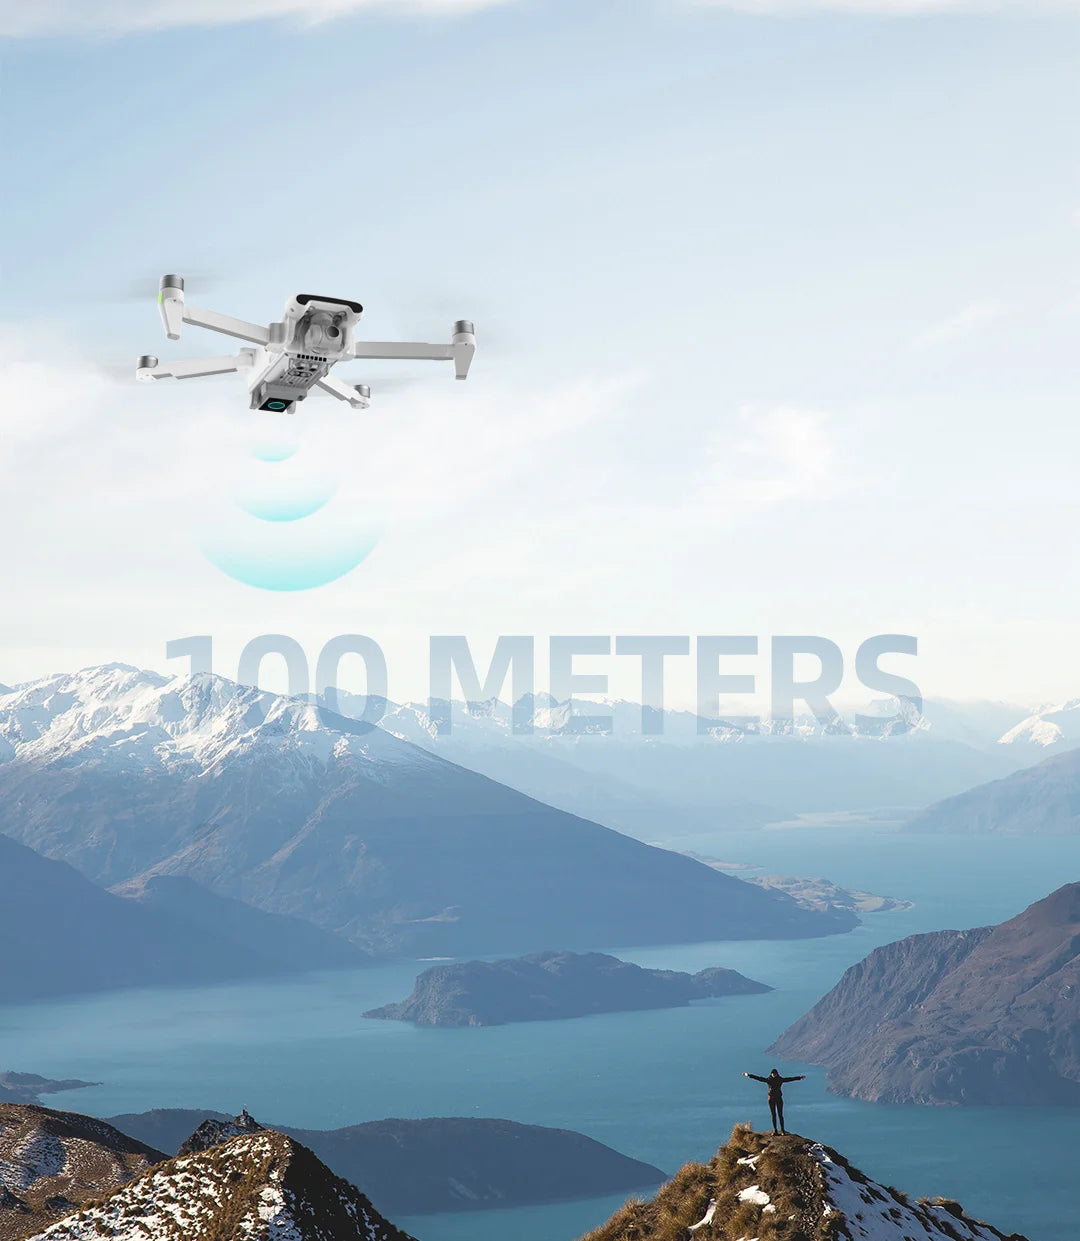 FIMI X8SE 2022 V2 Camera Drone, the upgraded 3rd generation RokLink high-definition digital image transmission system with